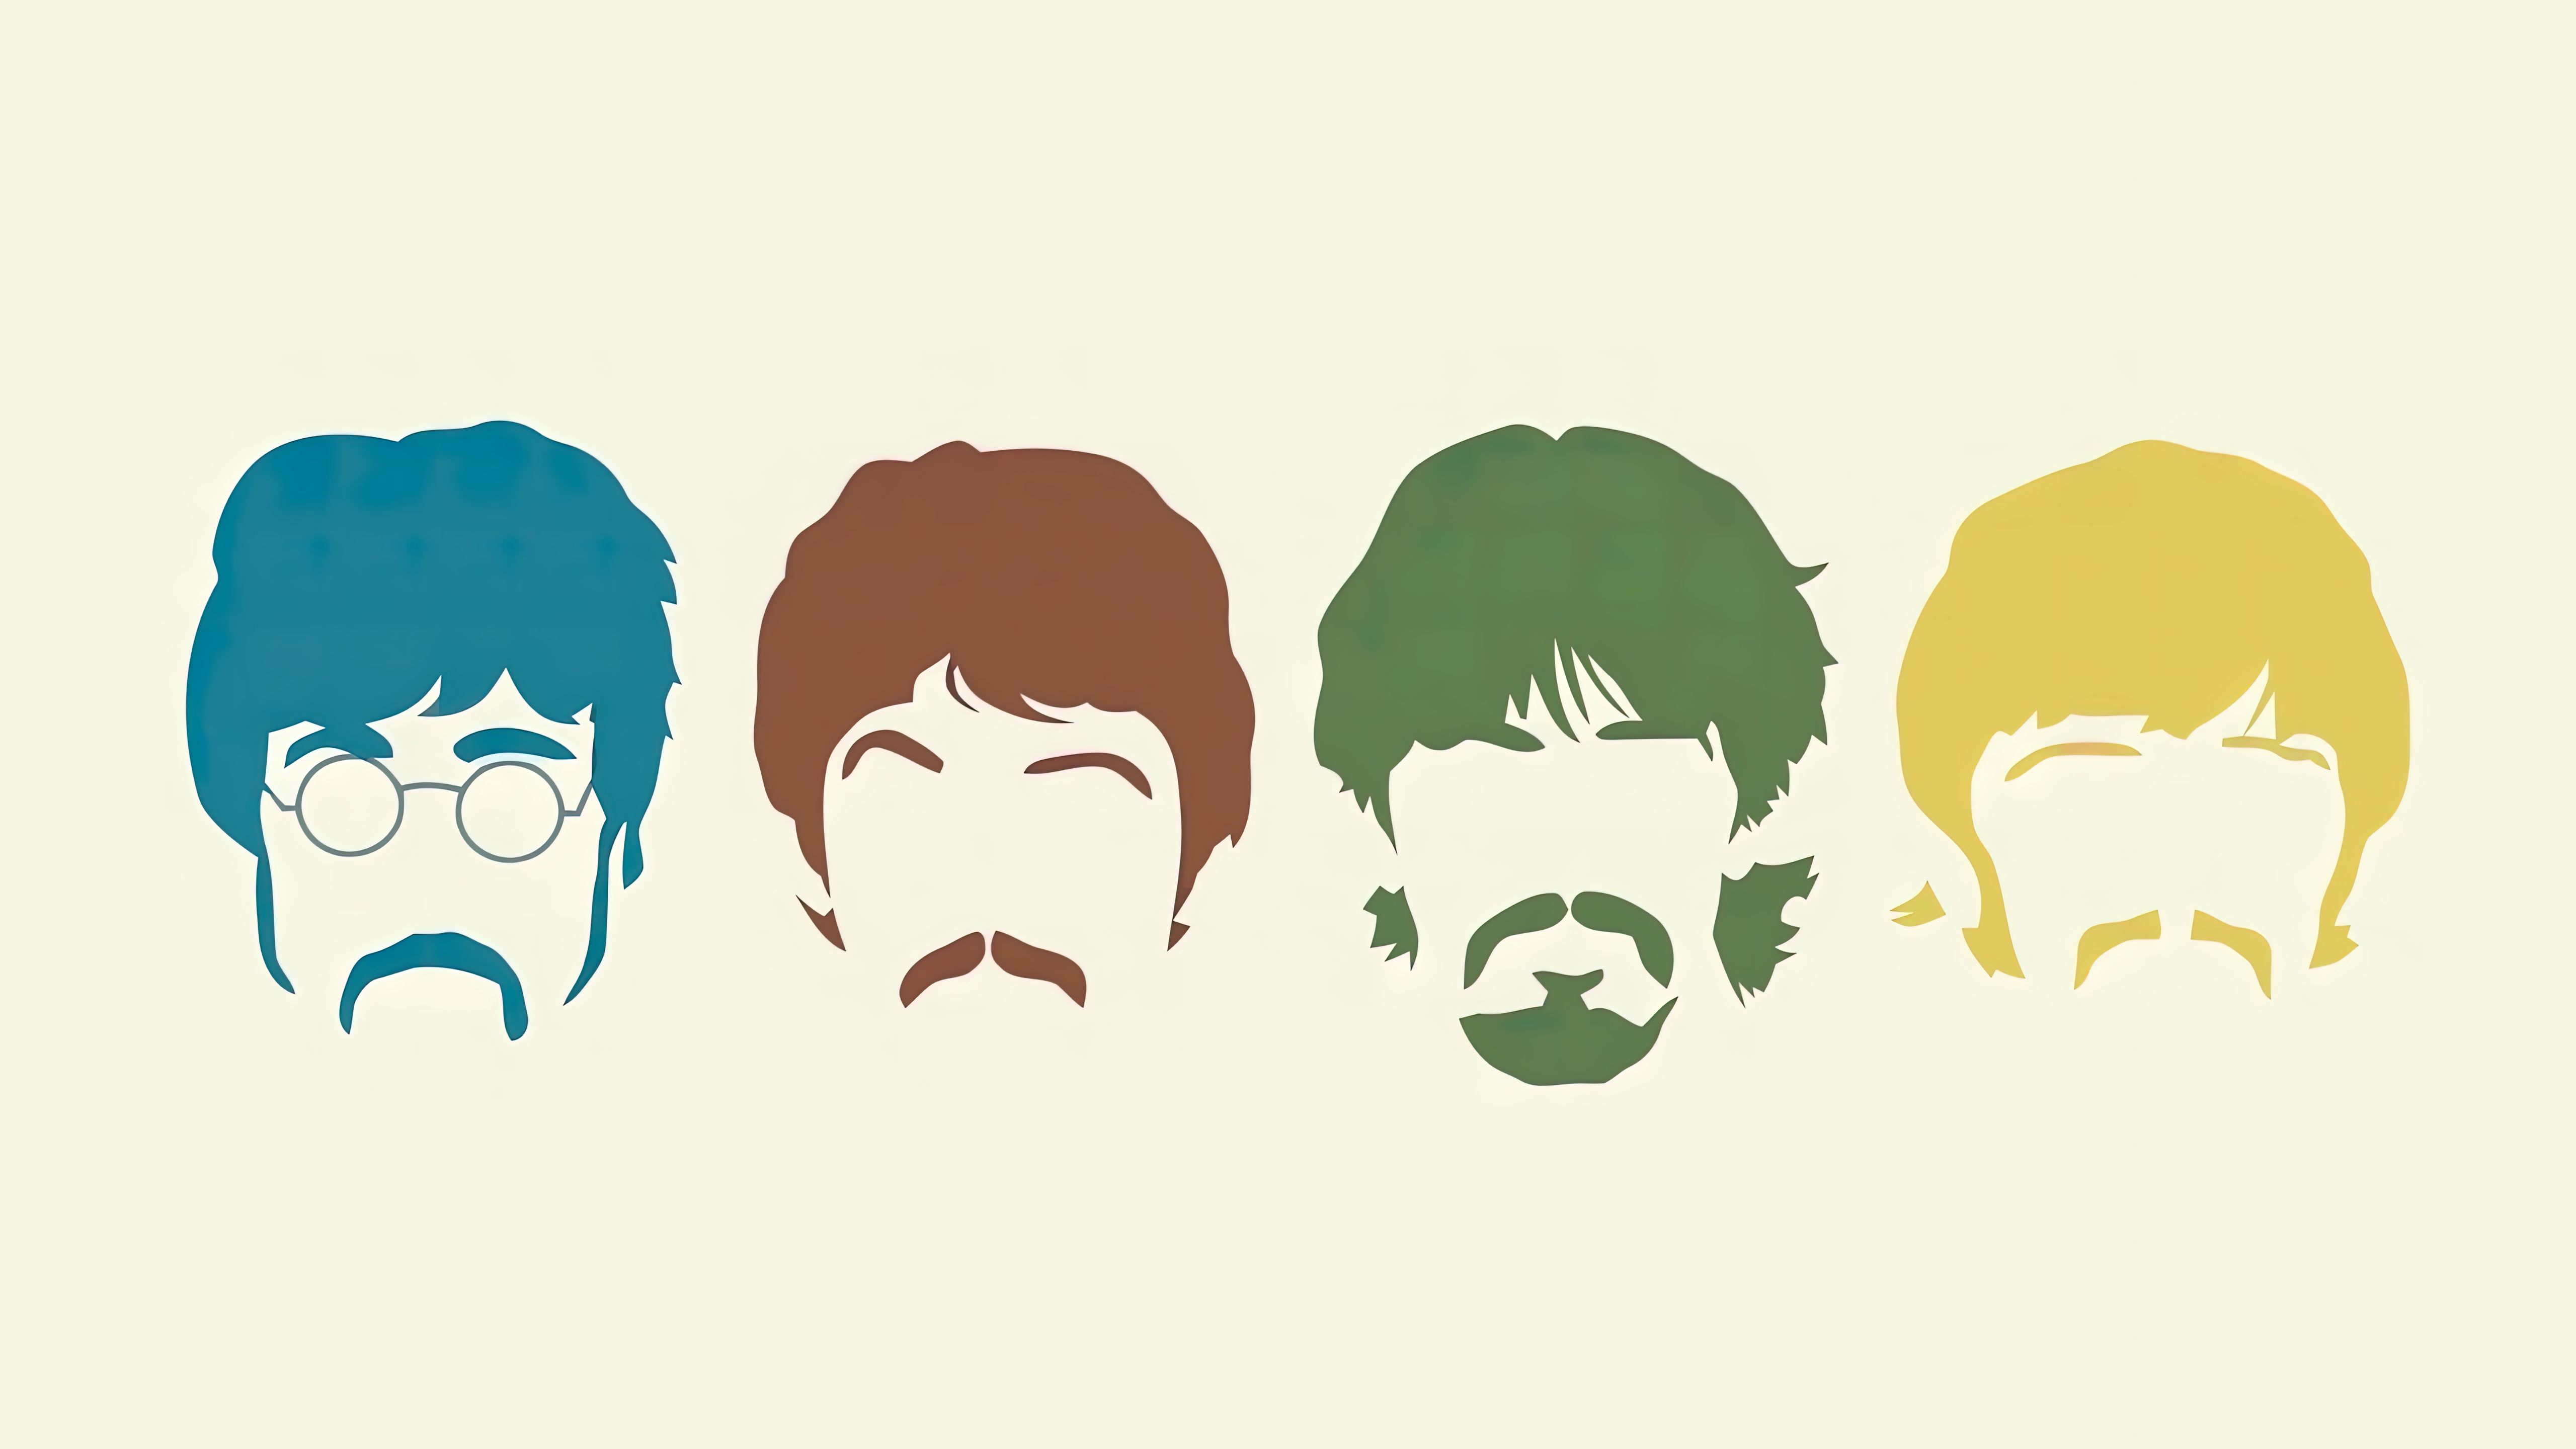 HD wallpaper, Minimalist, Simple, 5K, John Lennon, Paul Mccartney, The Beatles, George Harrison, Ringo Starr